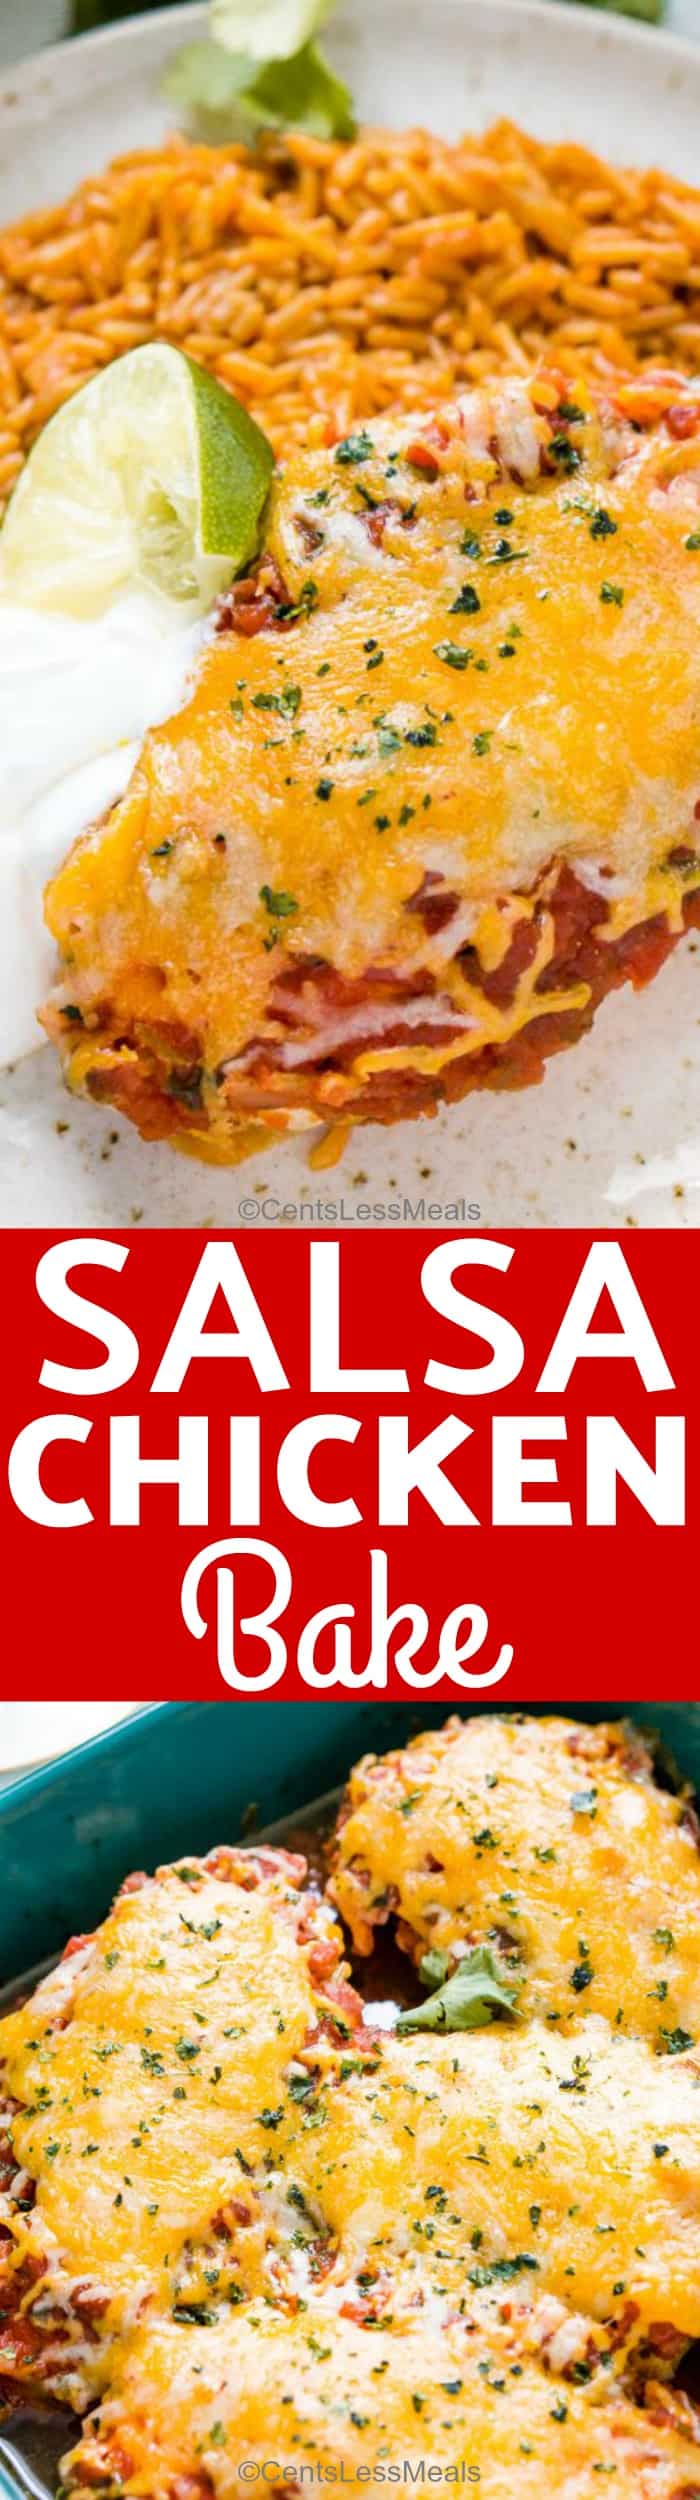 Salsa Chicken Bake with a title